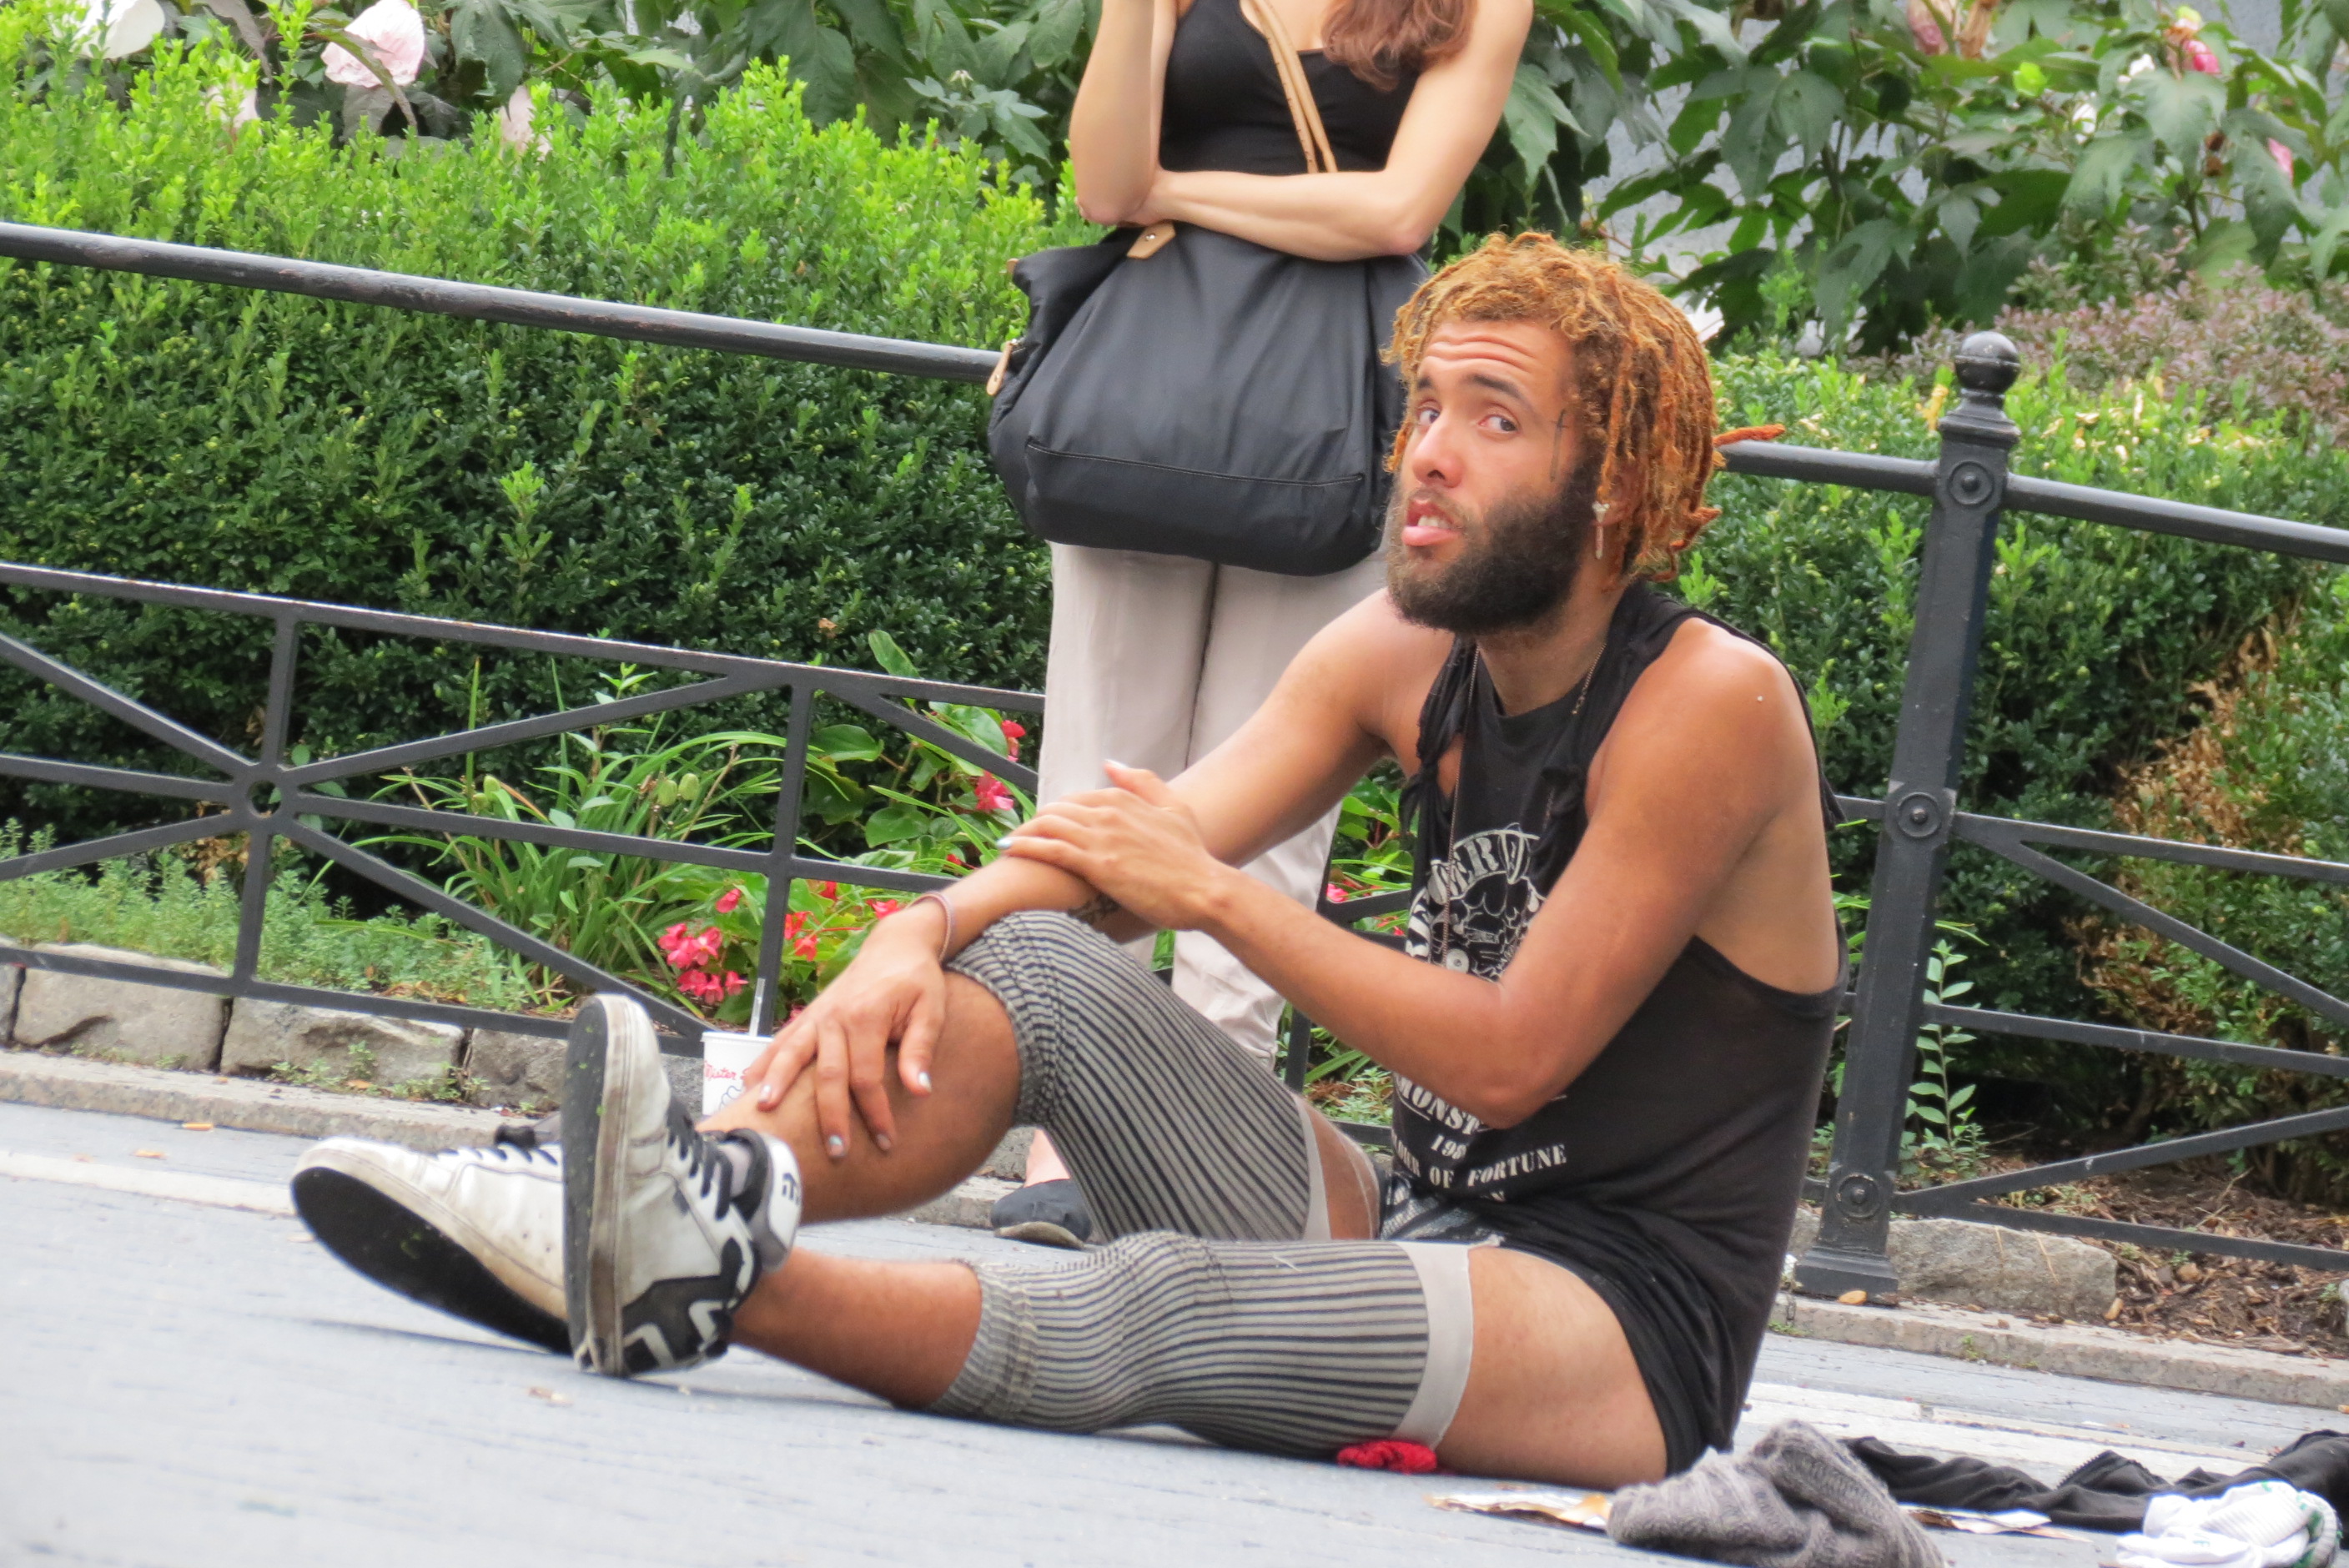 Homeless man wearing legwarmers